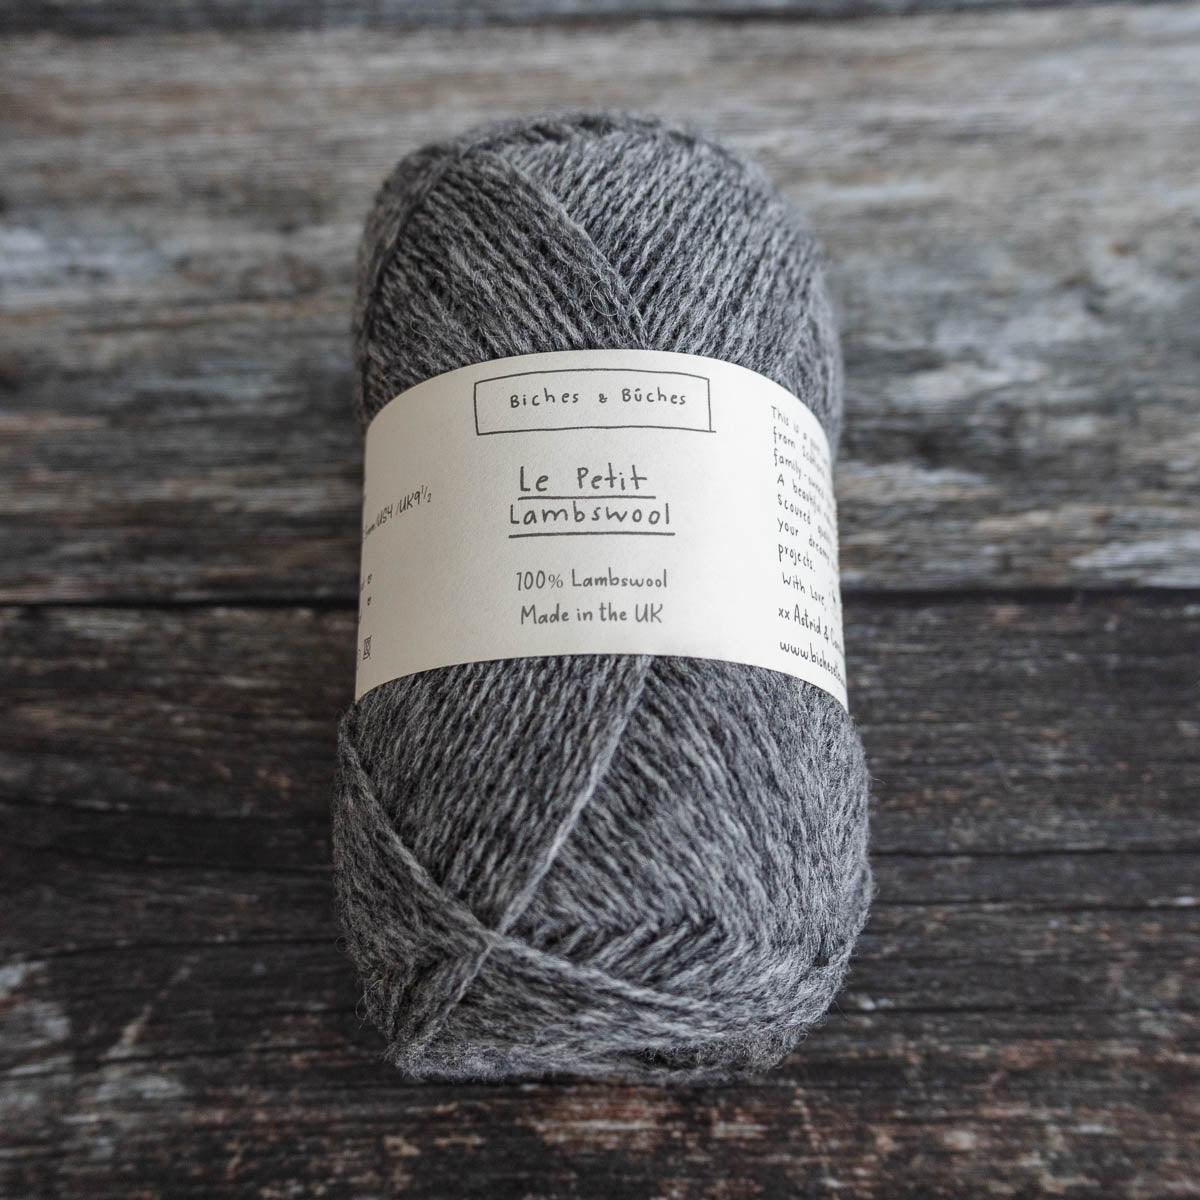 Biches & Bûches Biches & Bûches Le Petit Lambswool - Medium Grey - 4ply Knitting Yarn